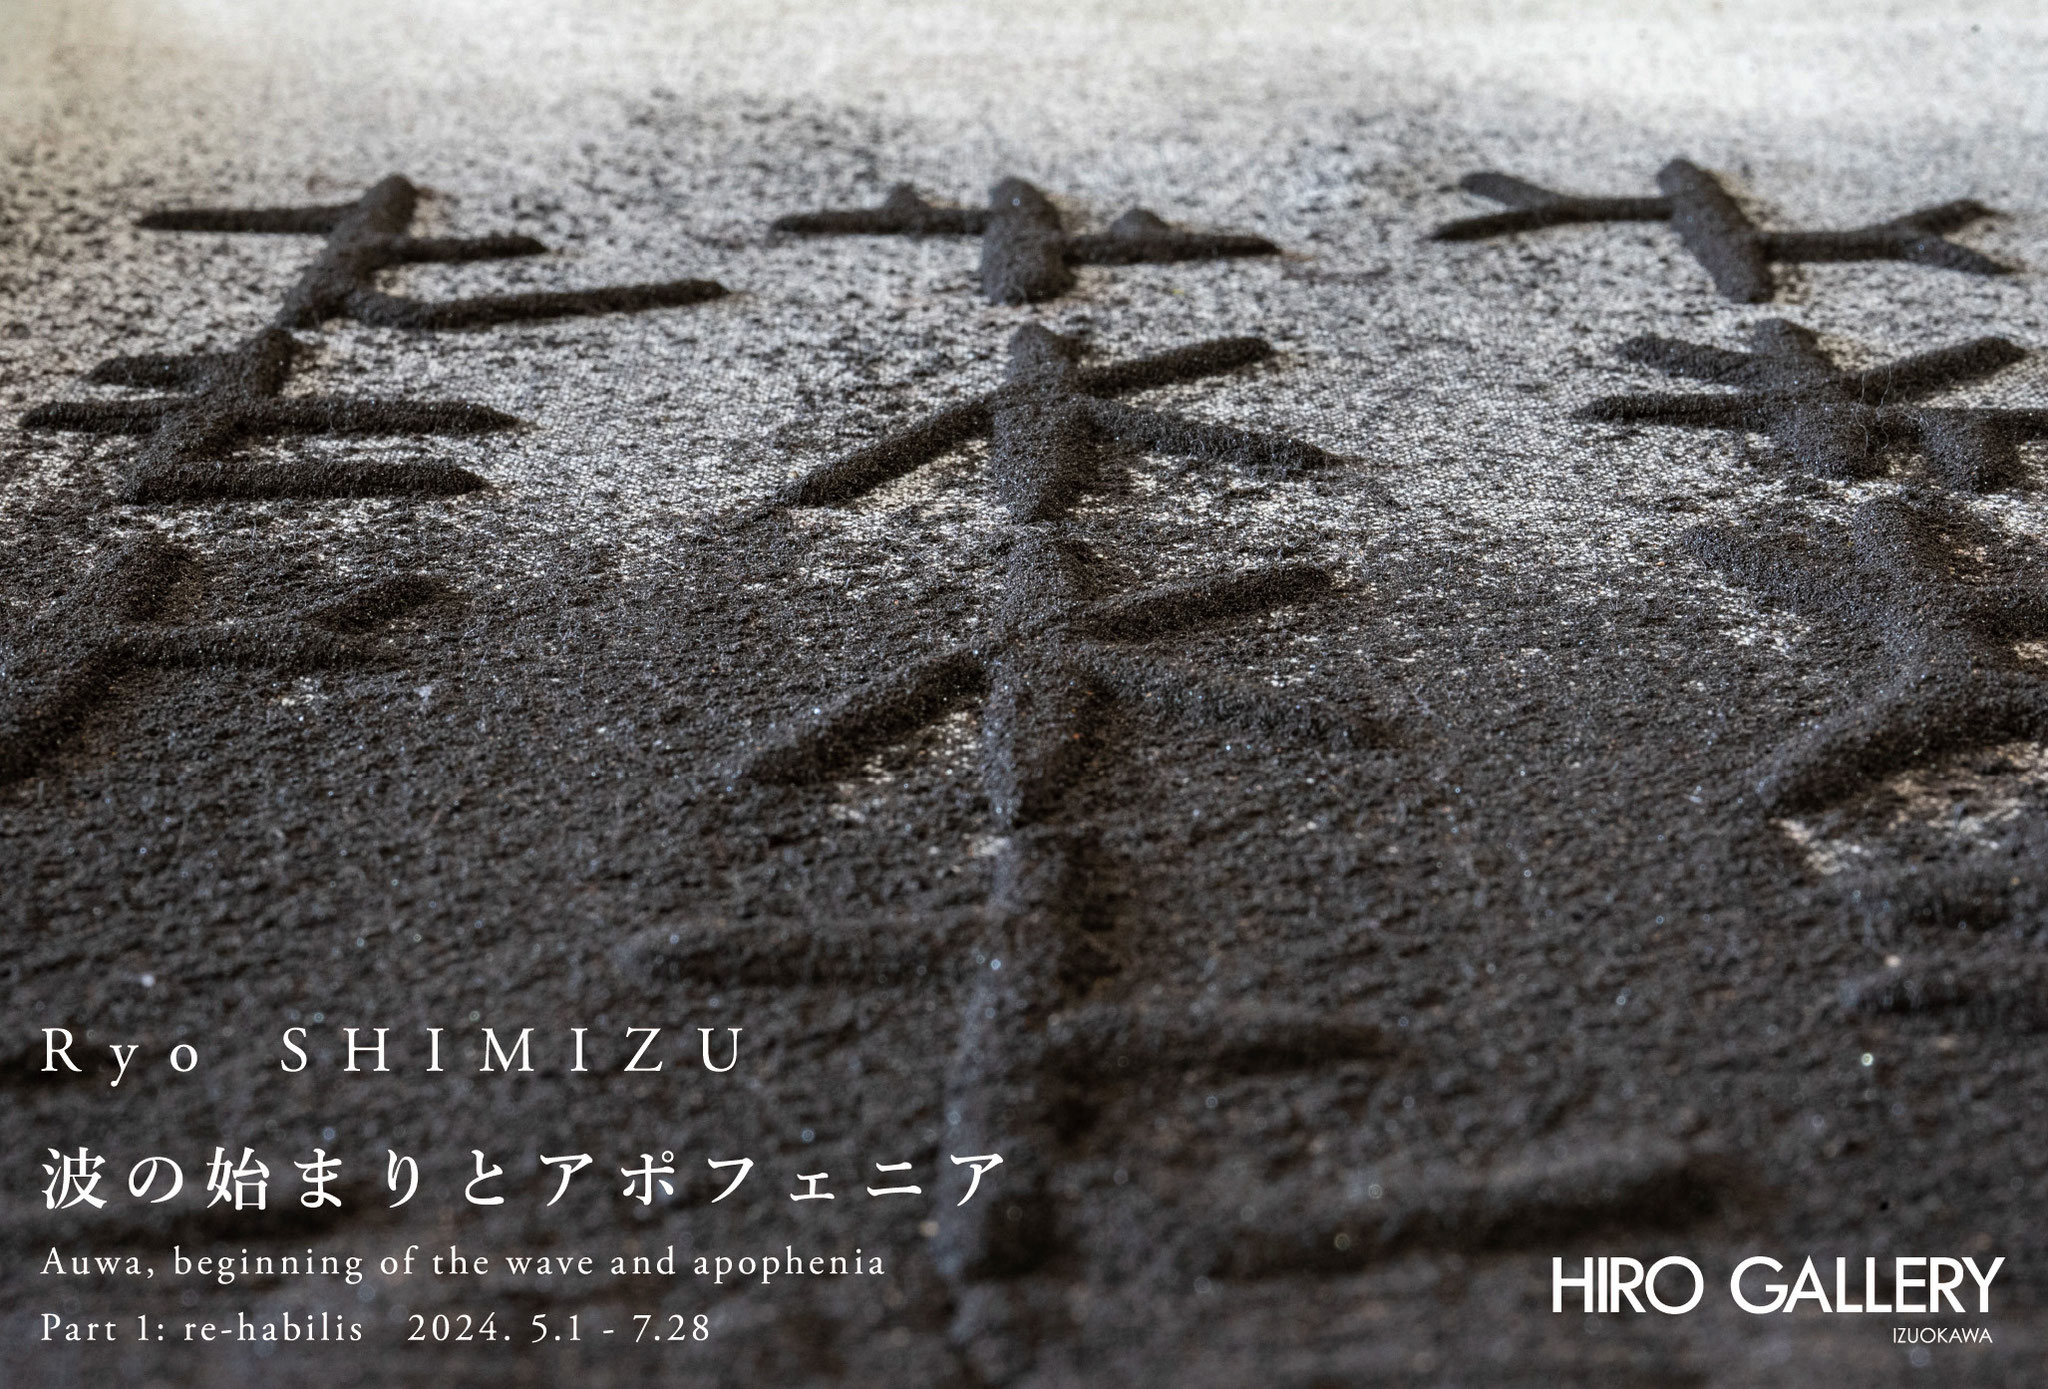 [On-going] 2024.5.1 - 7.28   Ryo SHIMIZU: Auwa, beginning of the wave and apophenia